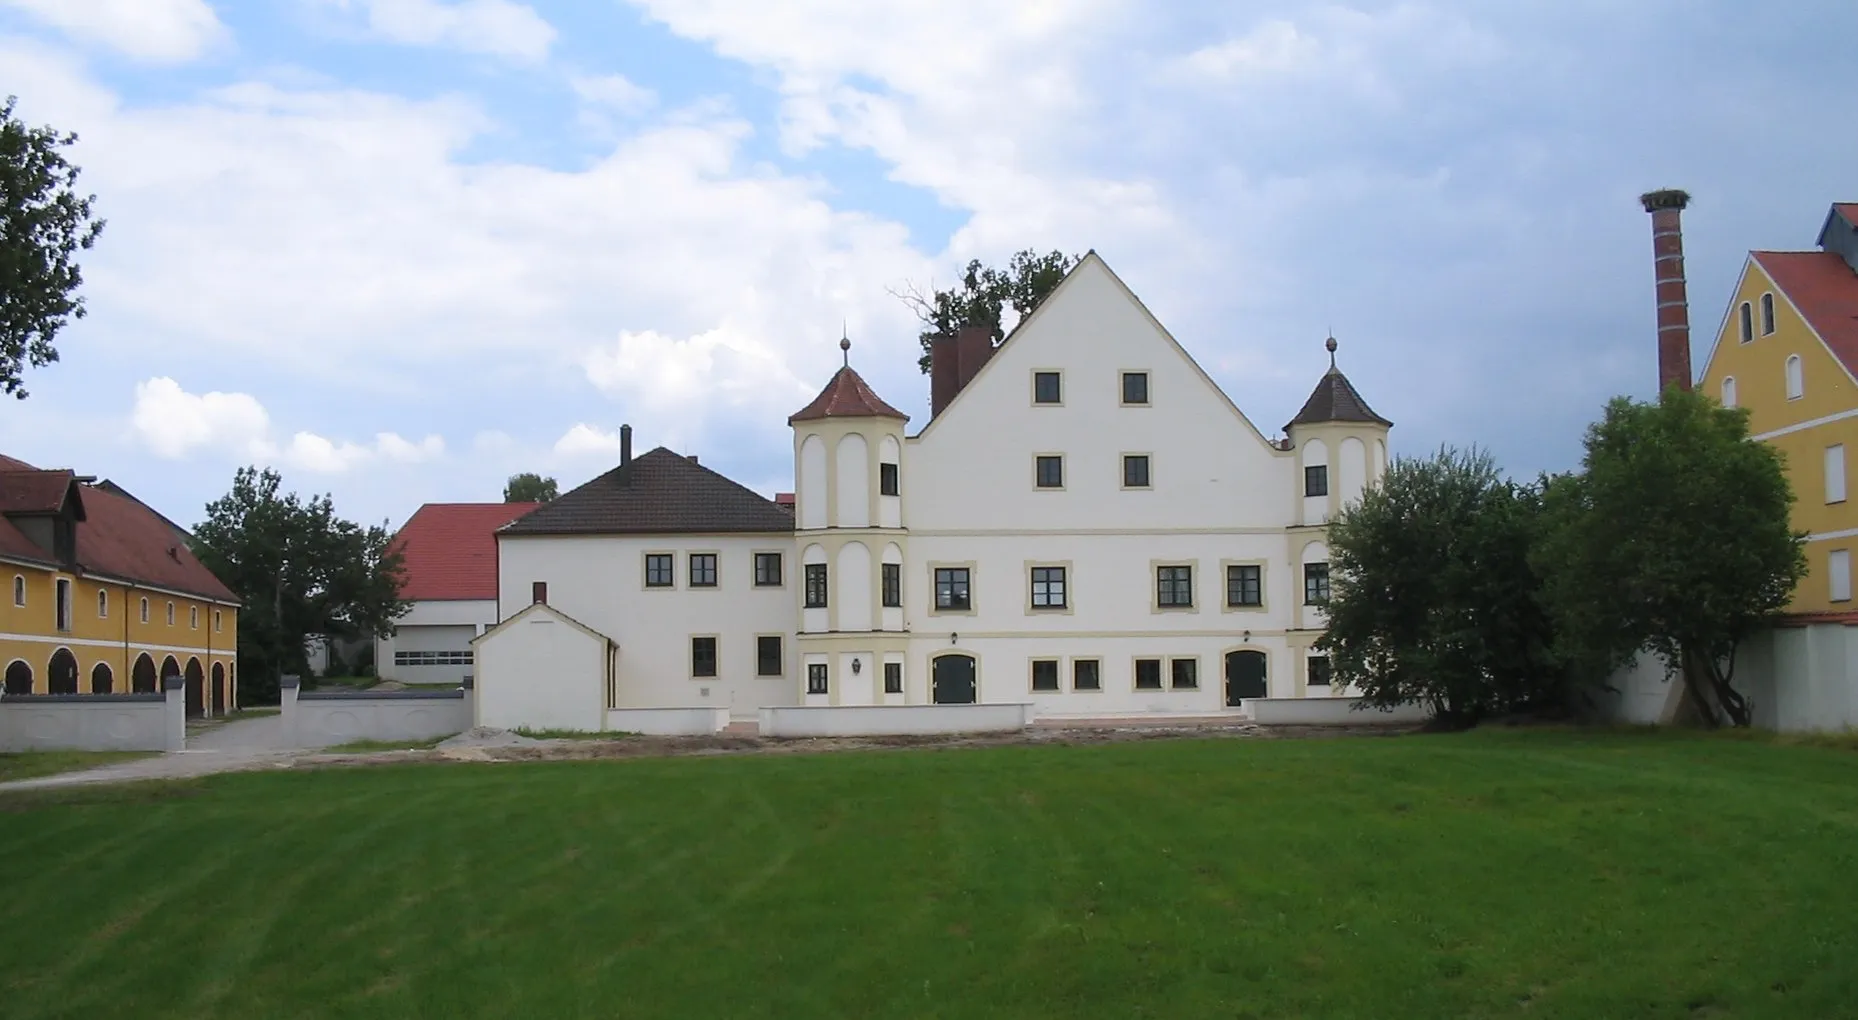 Image of Pörnbach